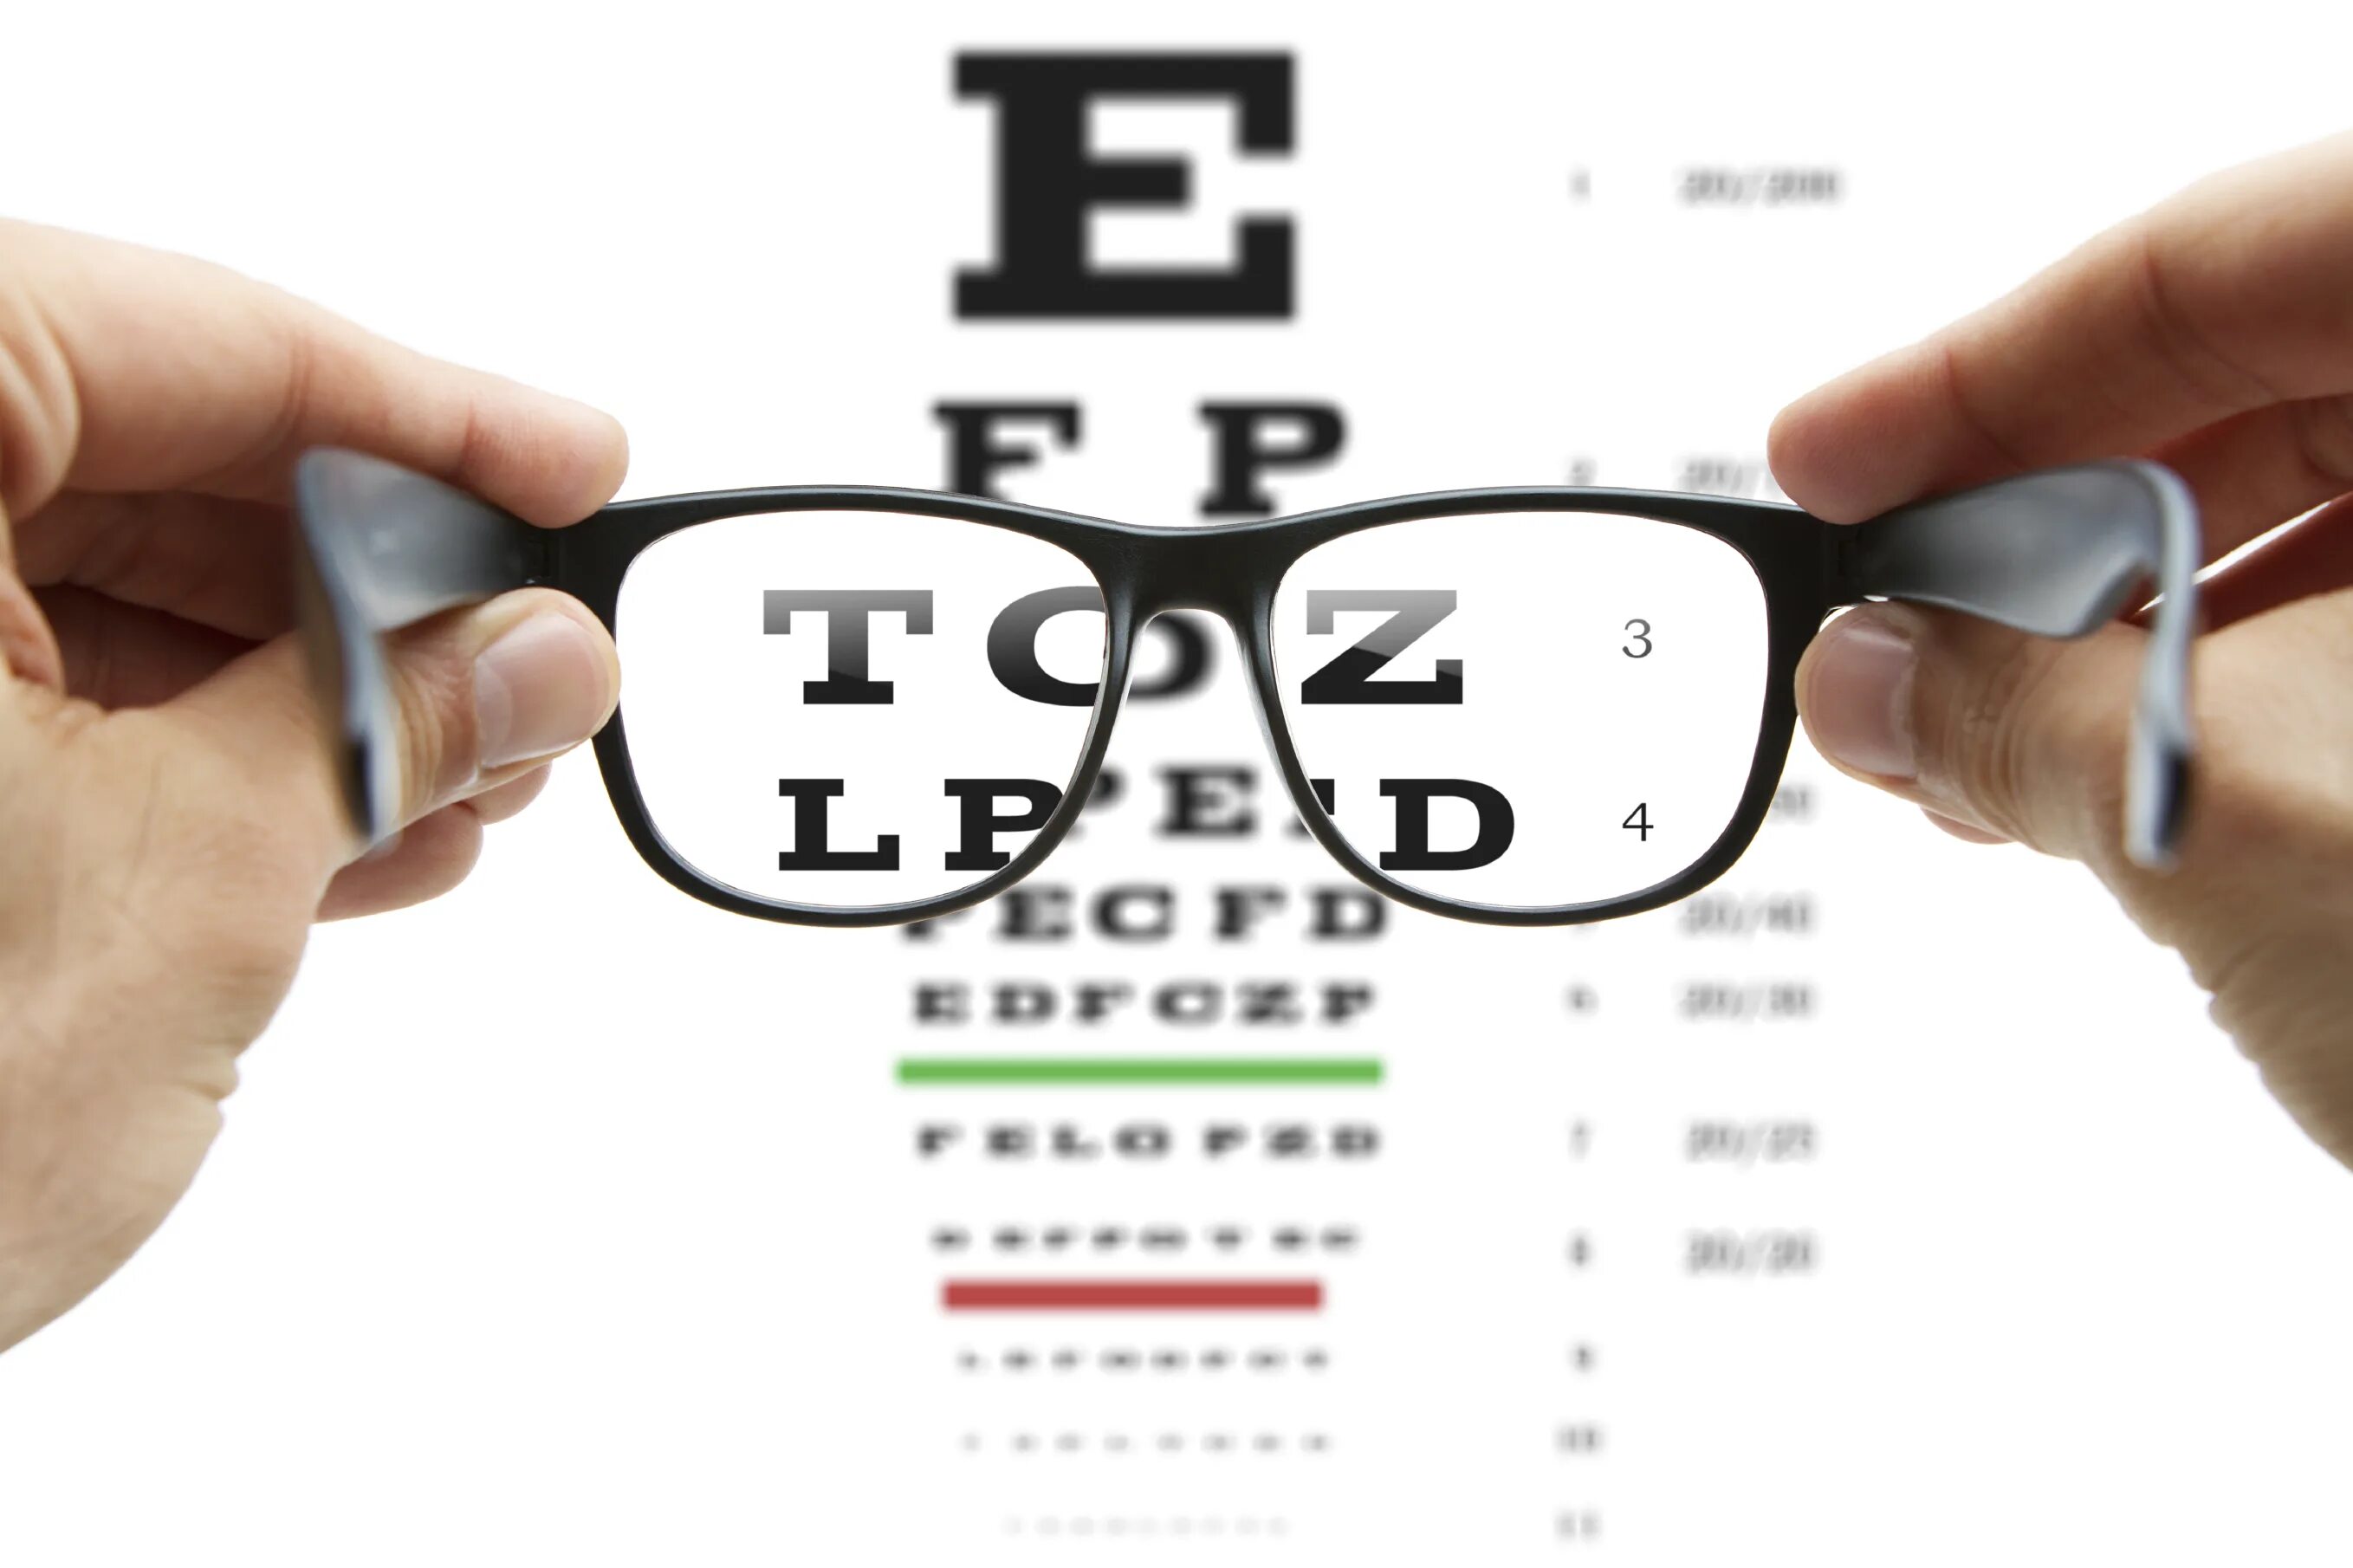 Оценка качества зрения. Оптика очки для проверки зрения. Картинки для зрения. Визитка оптики. Аппарат для проверки зрения.